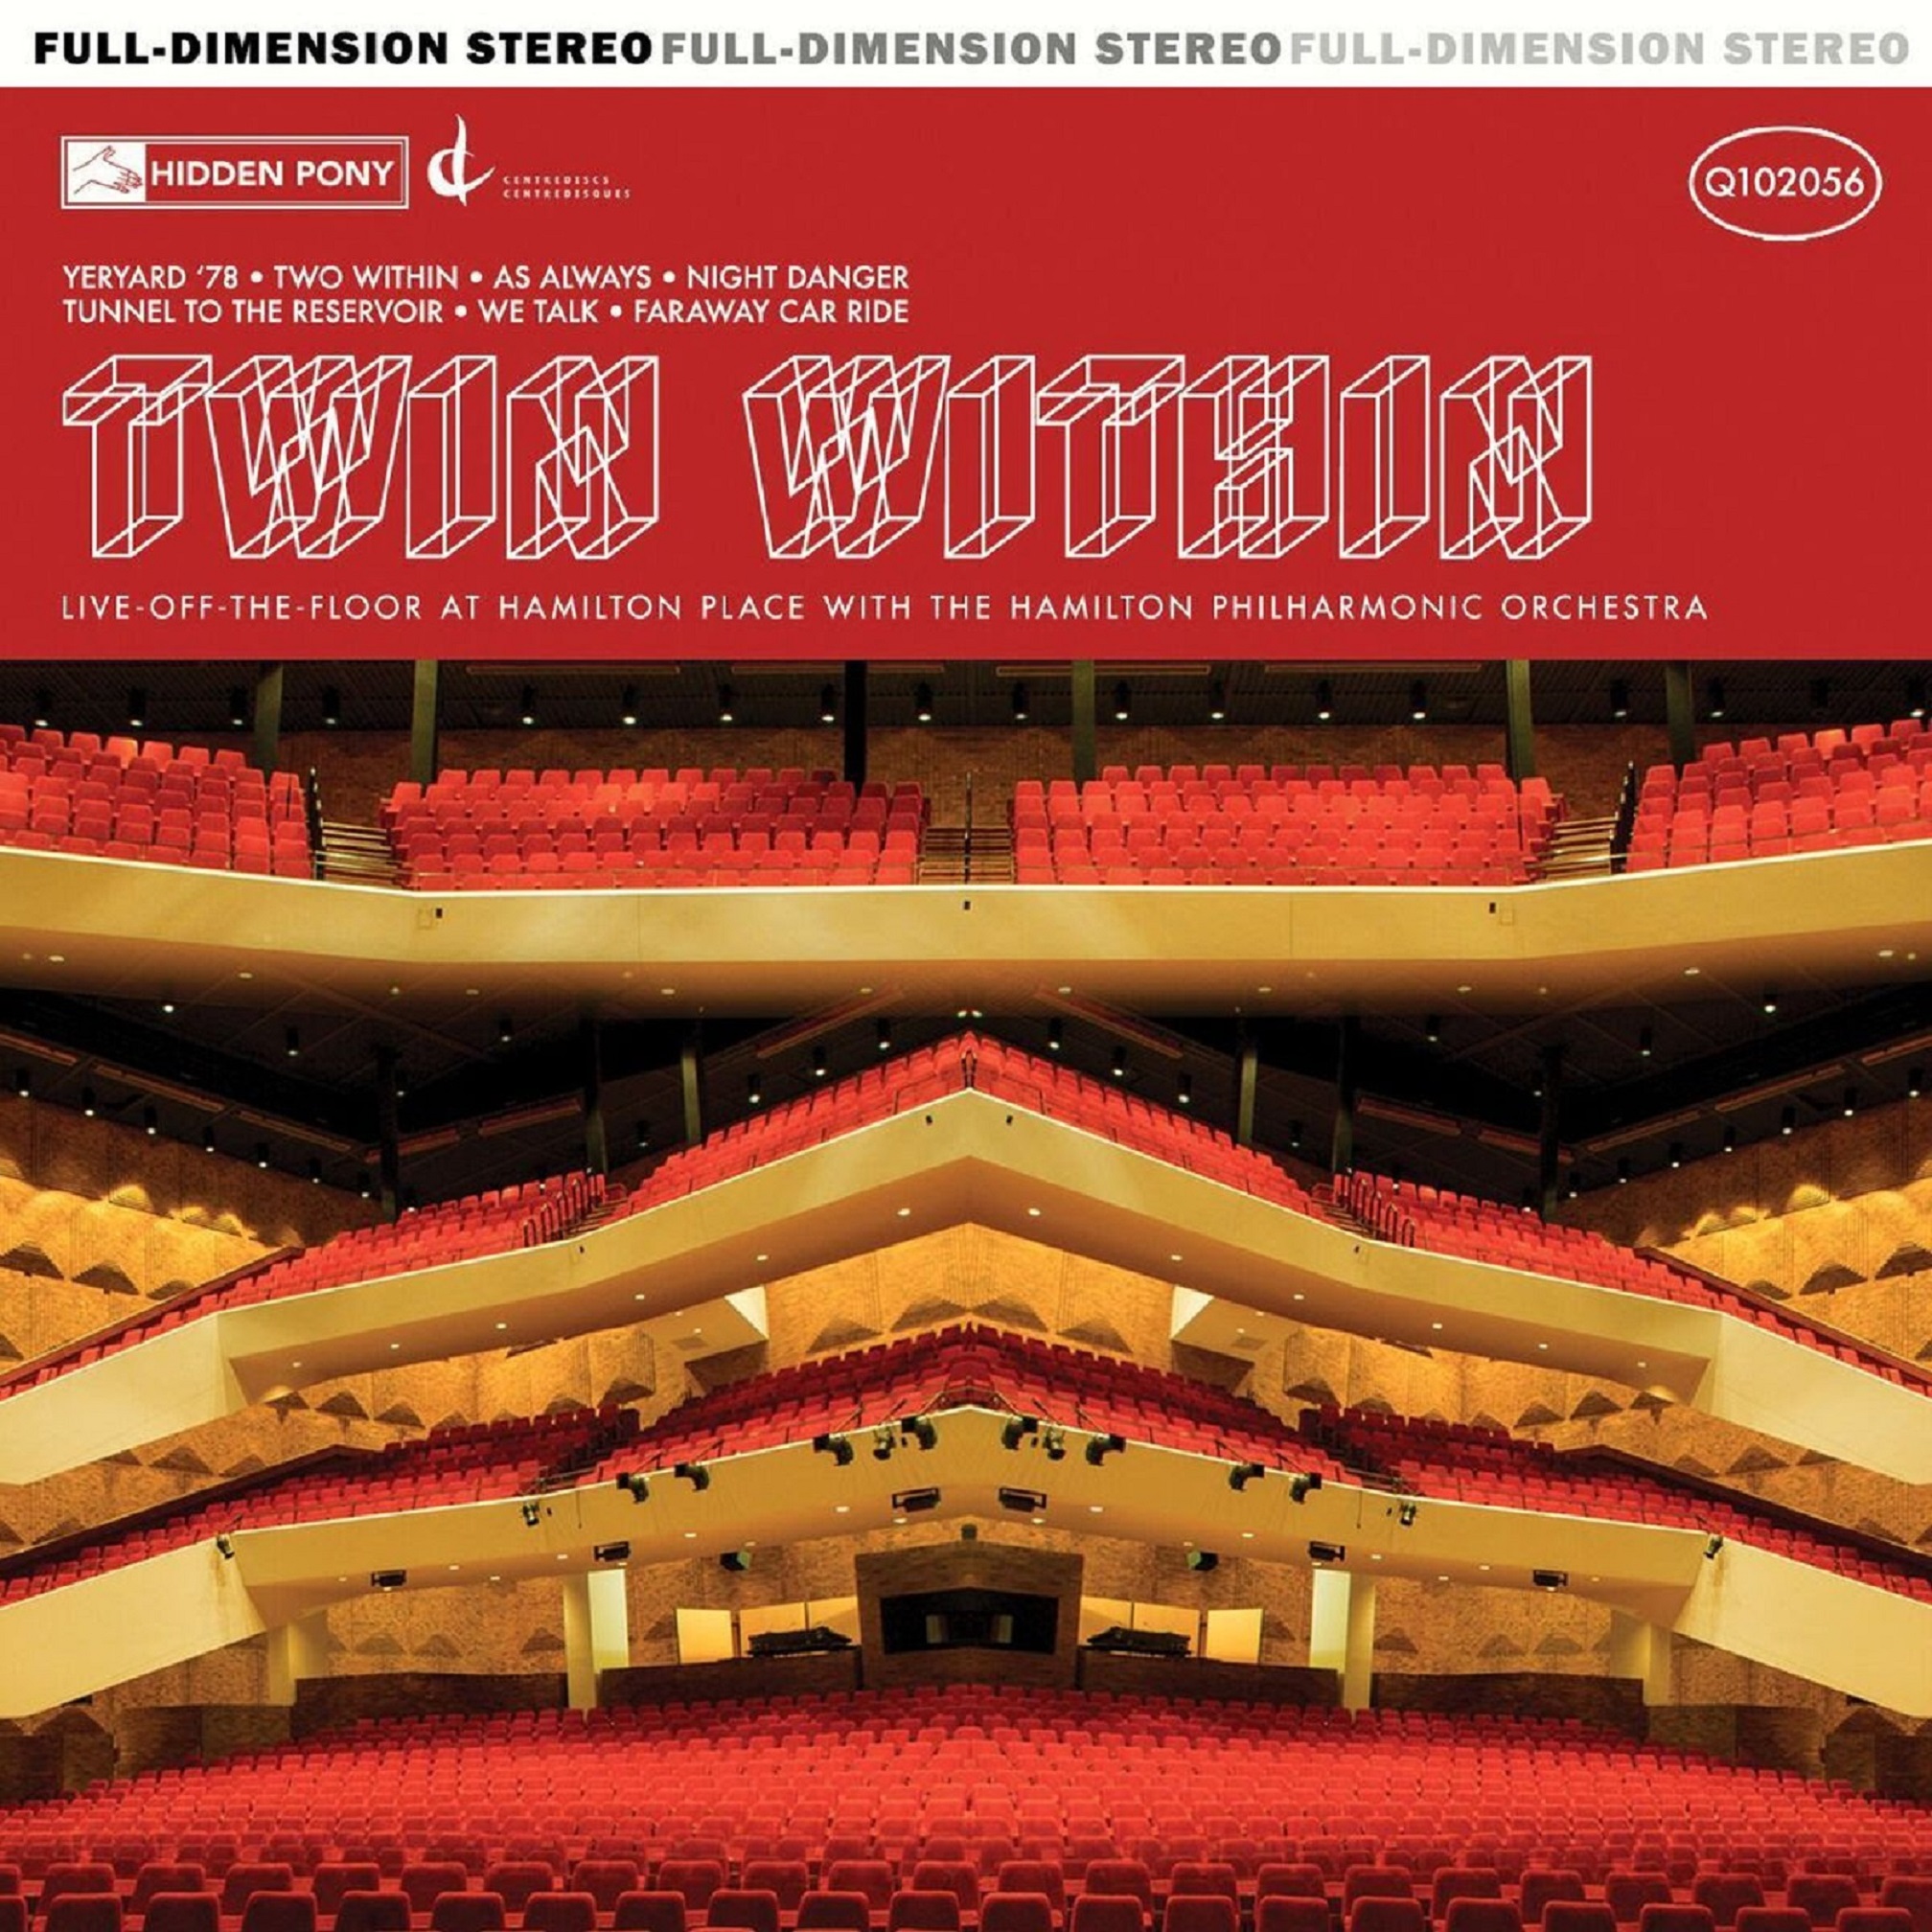 Twin Within Share Live Album w/ Hamilton Philharmonic Orchestra